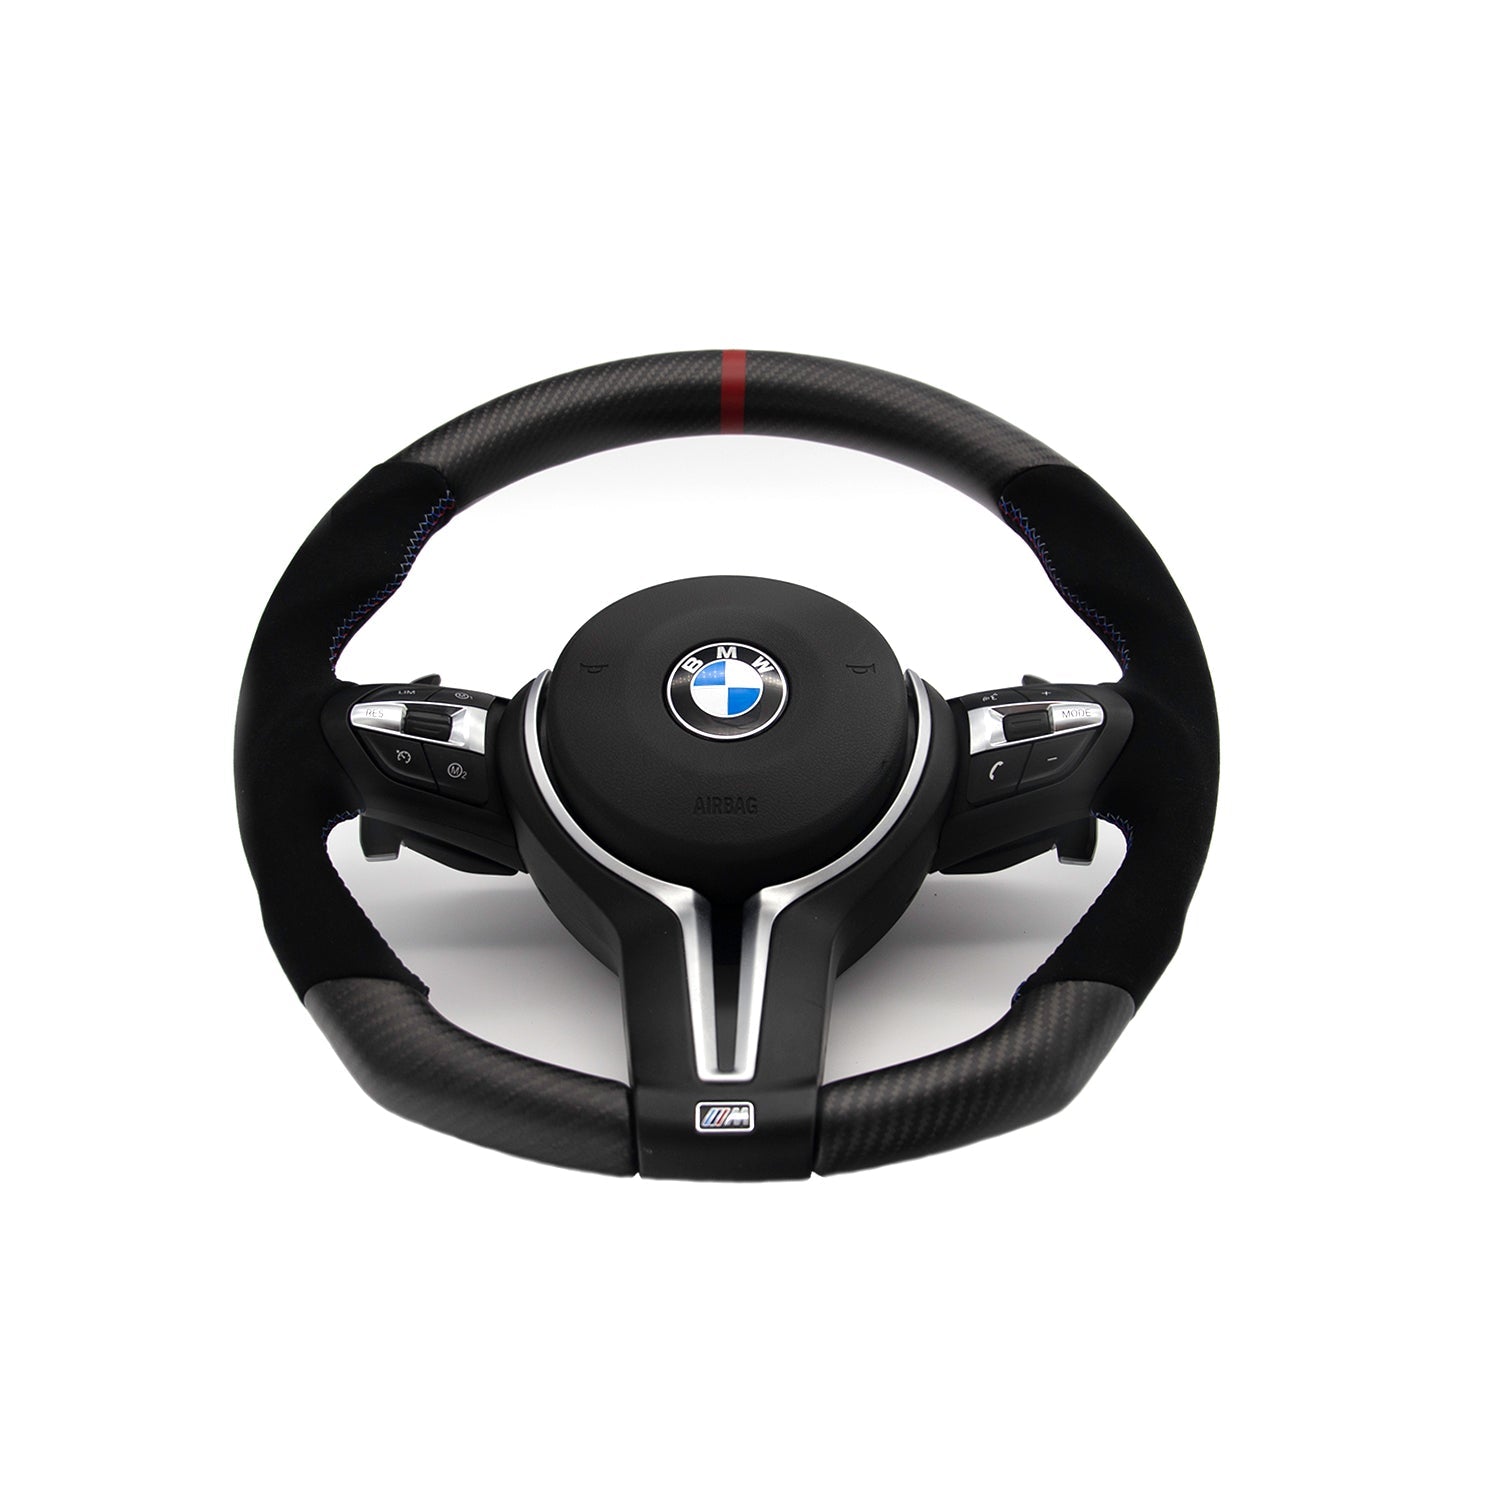 Autotecknic Carbon Alcantara Lenkradverkleidung für BMW G-Serie